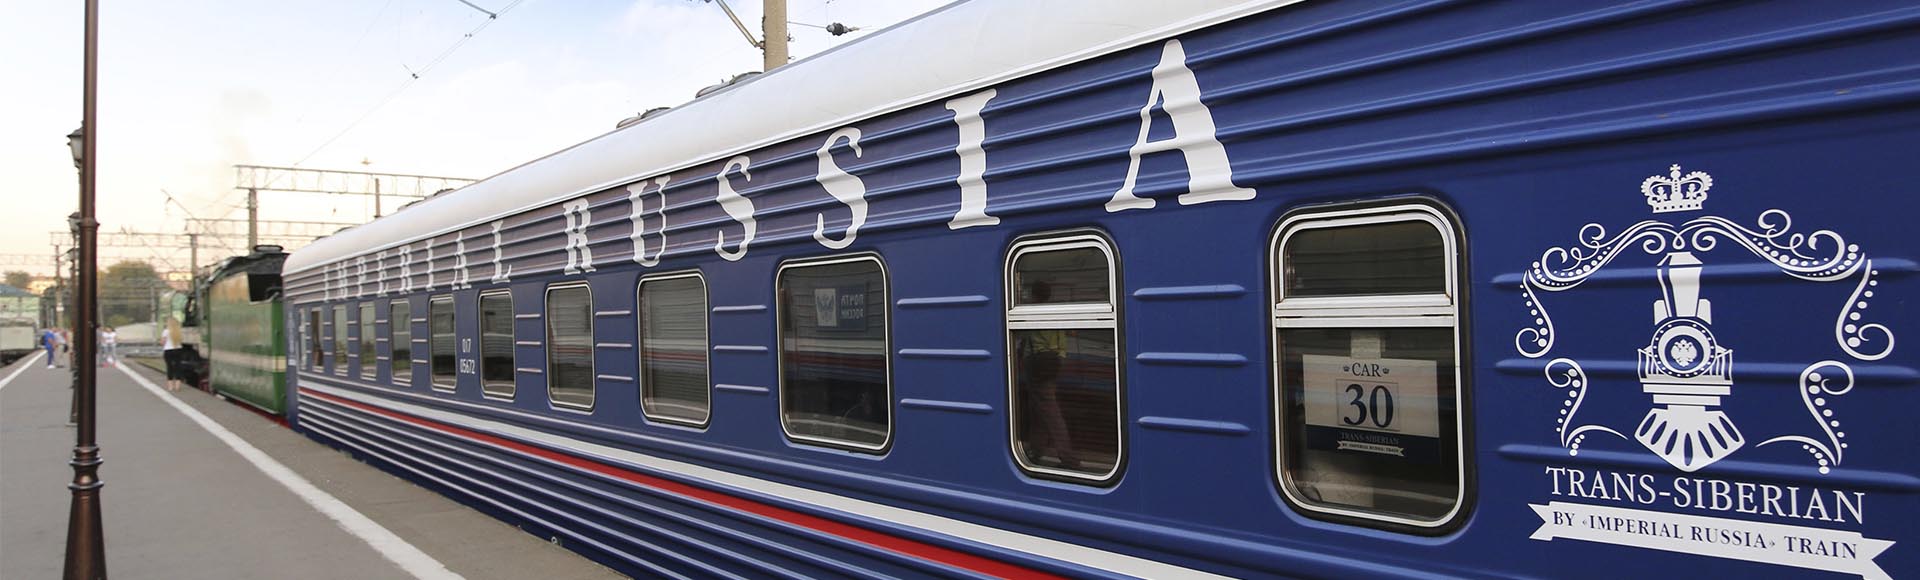 Trem de Luxo - Imperial Rússia